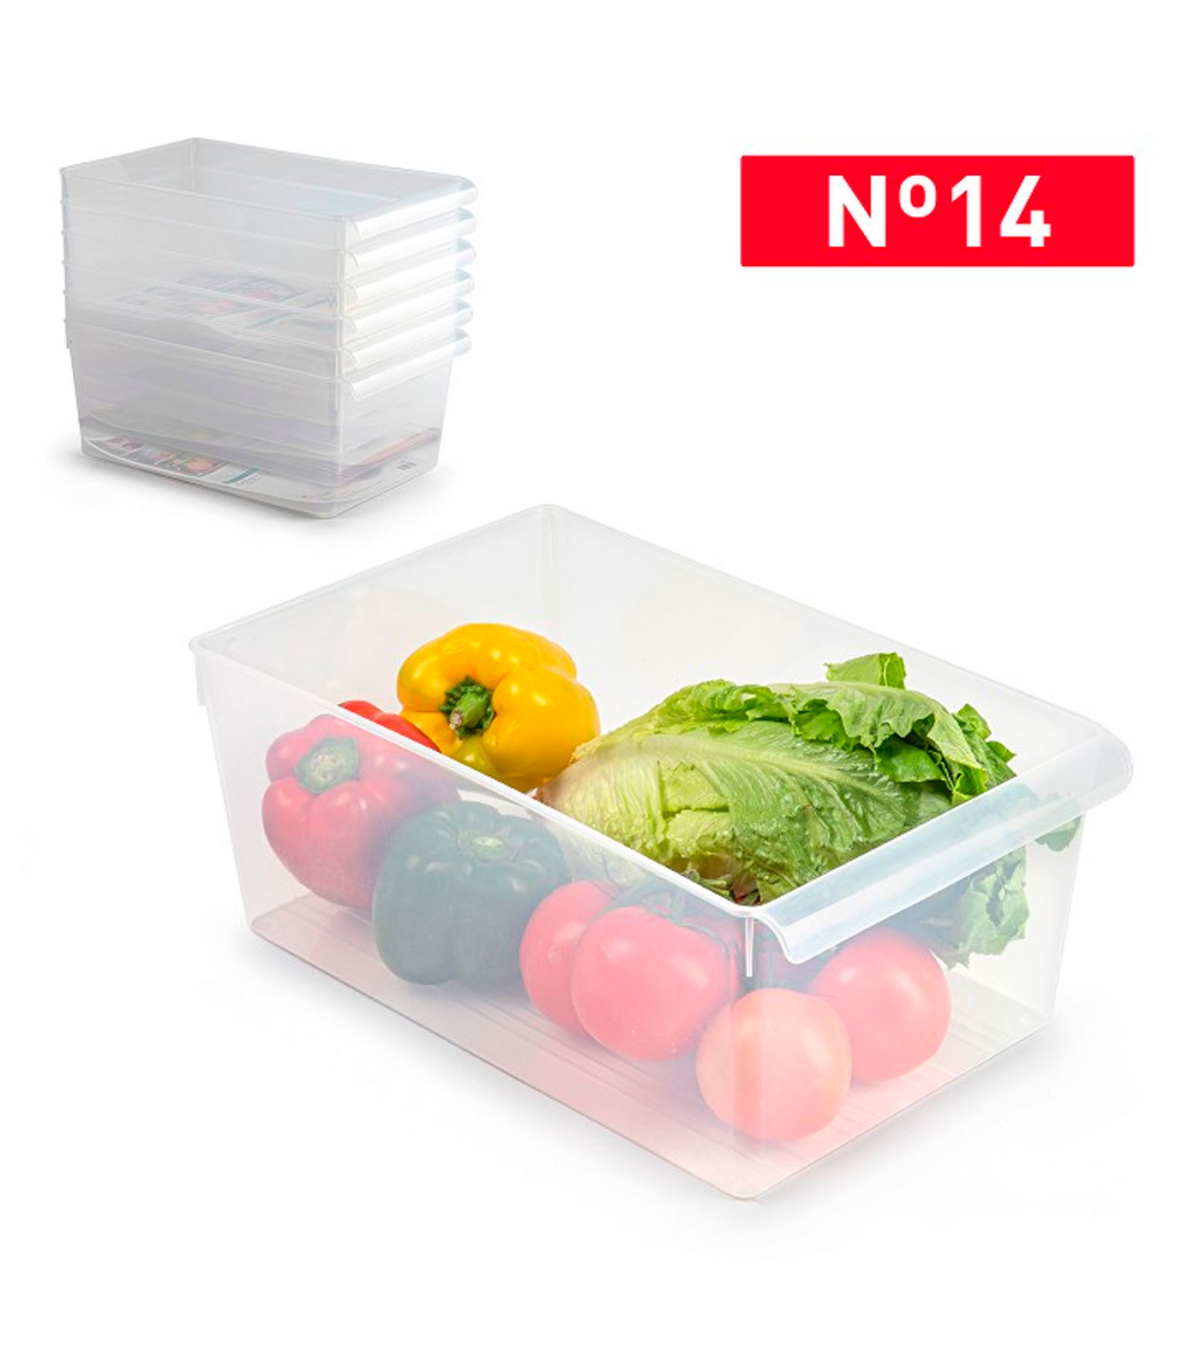 Tradineur - Cajón organizador para frigorífico Nº 14 - Fabricado en  Polipropileno - Recipiente de plástico transparente - 15 x 2